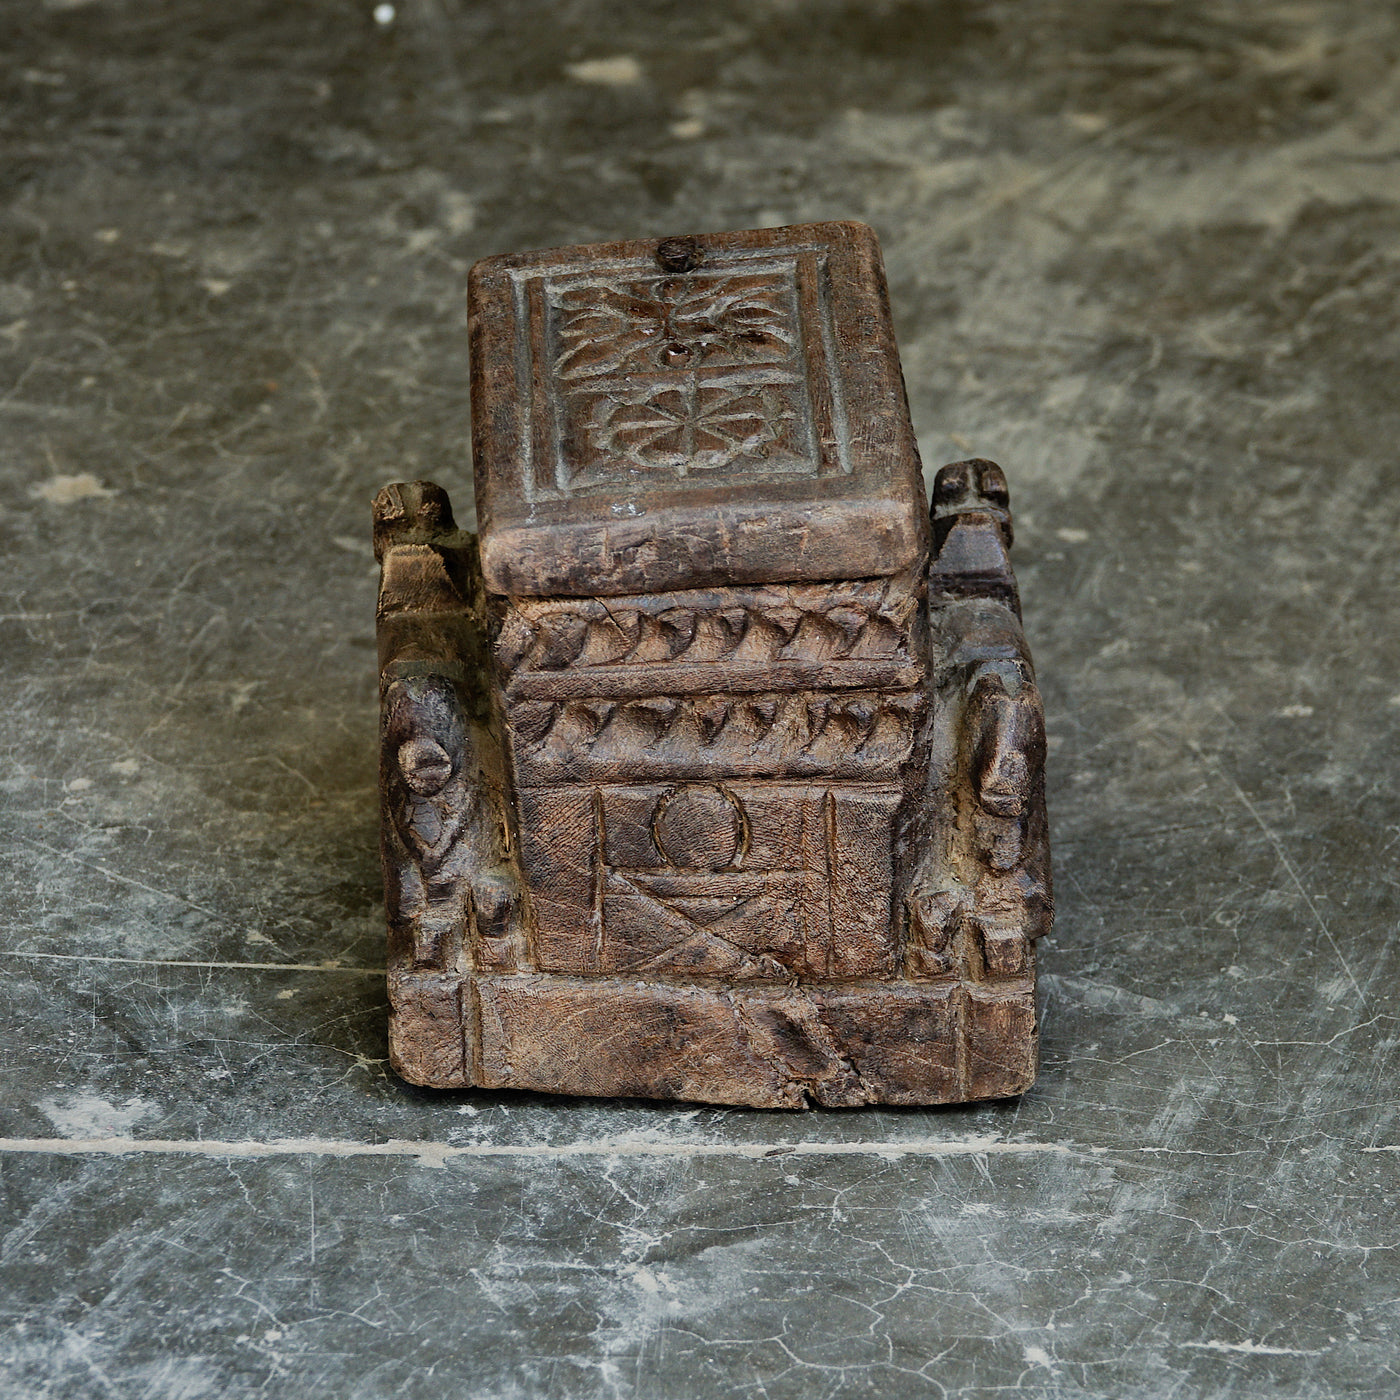 Nandi - Old box with sacred cows n ° 2